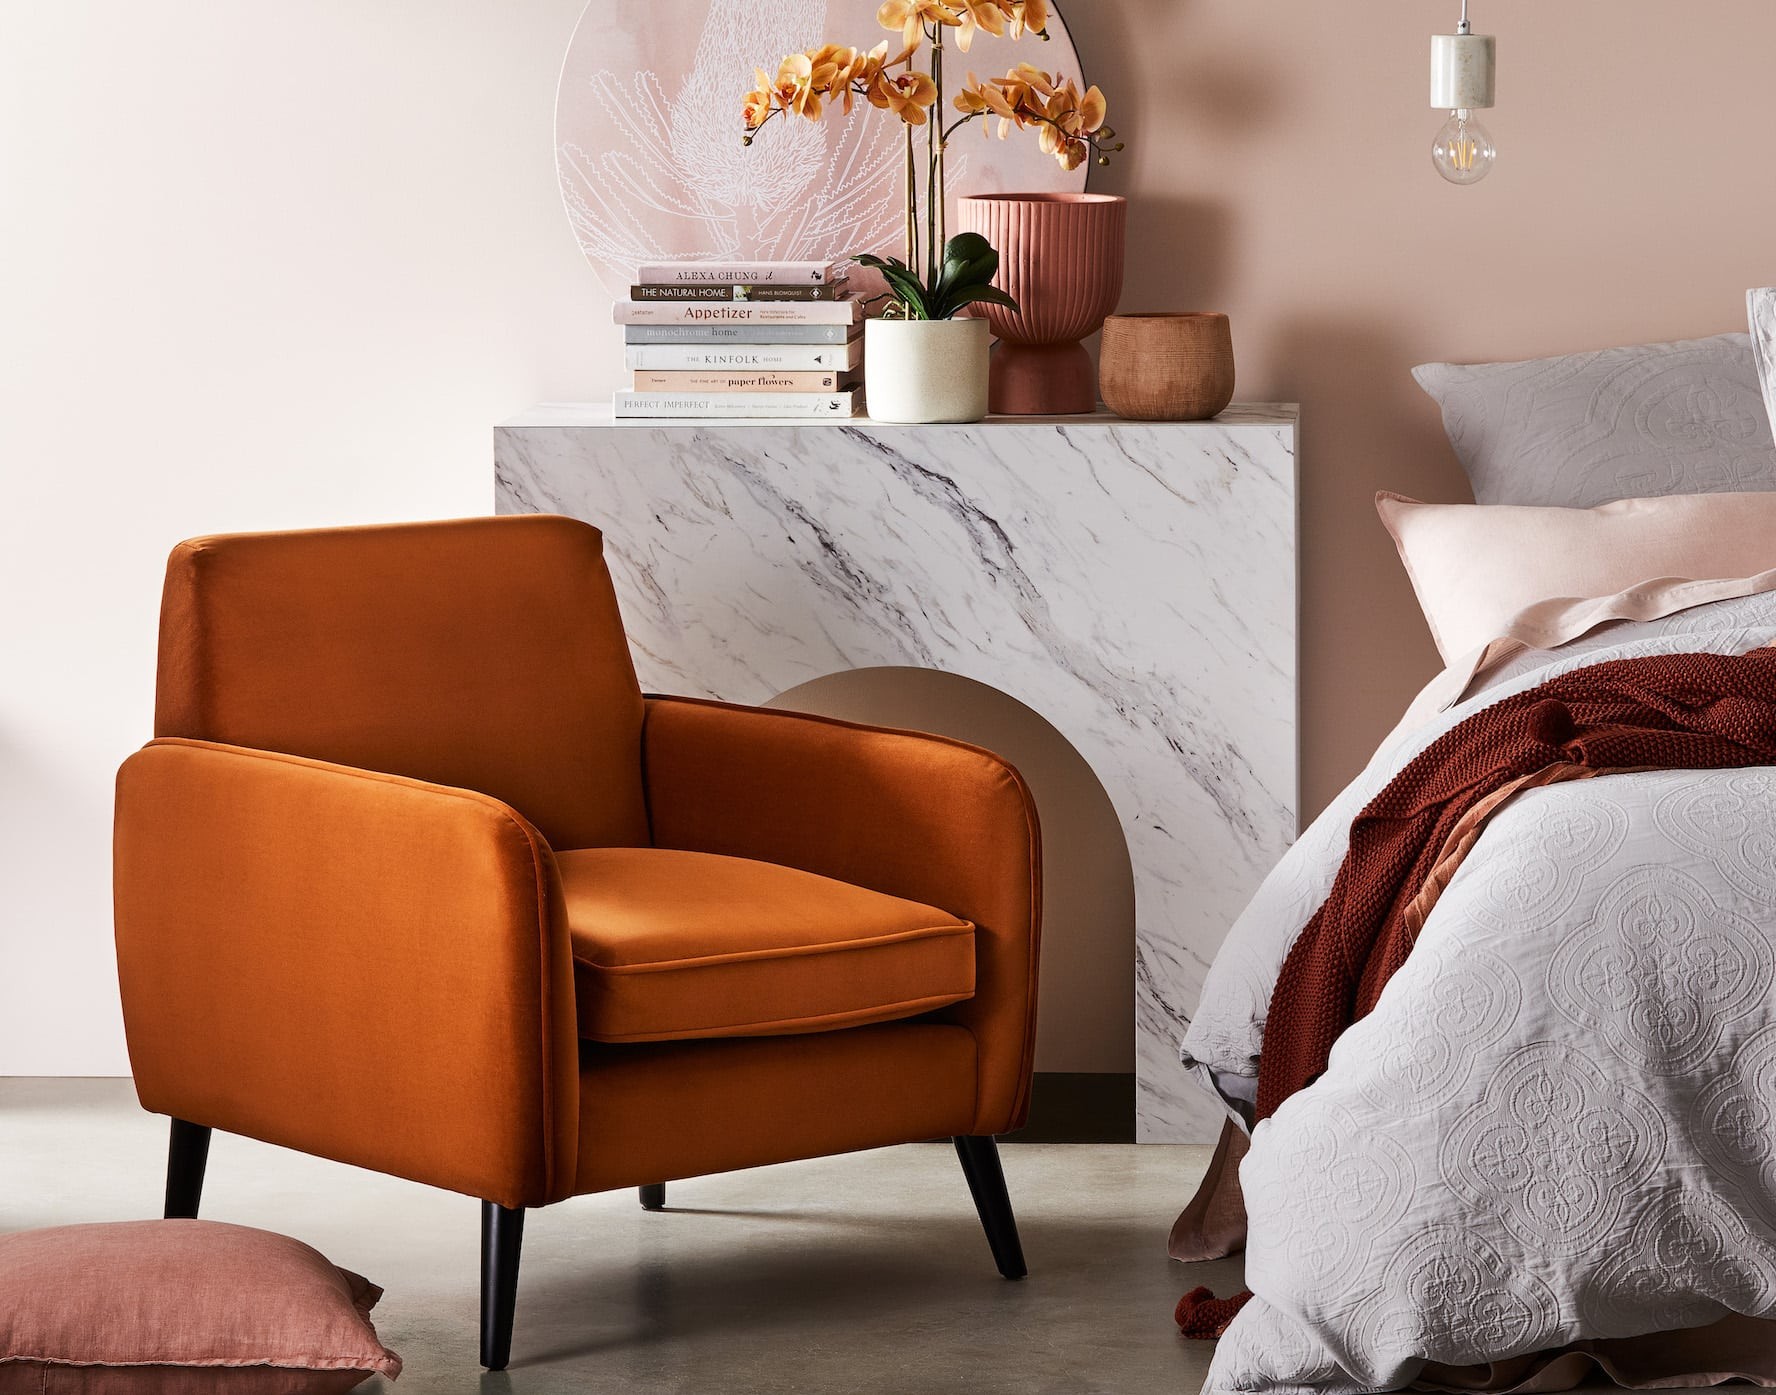 adairs portland armchair burnet orange velvet armchair in pink bedroom